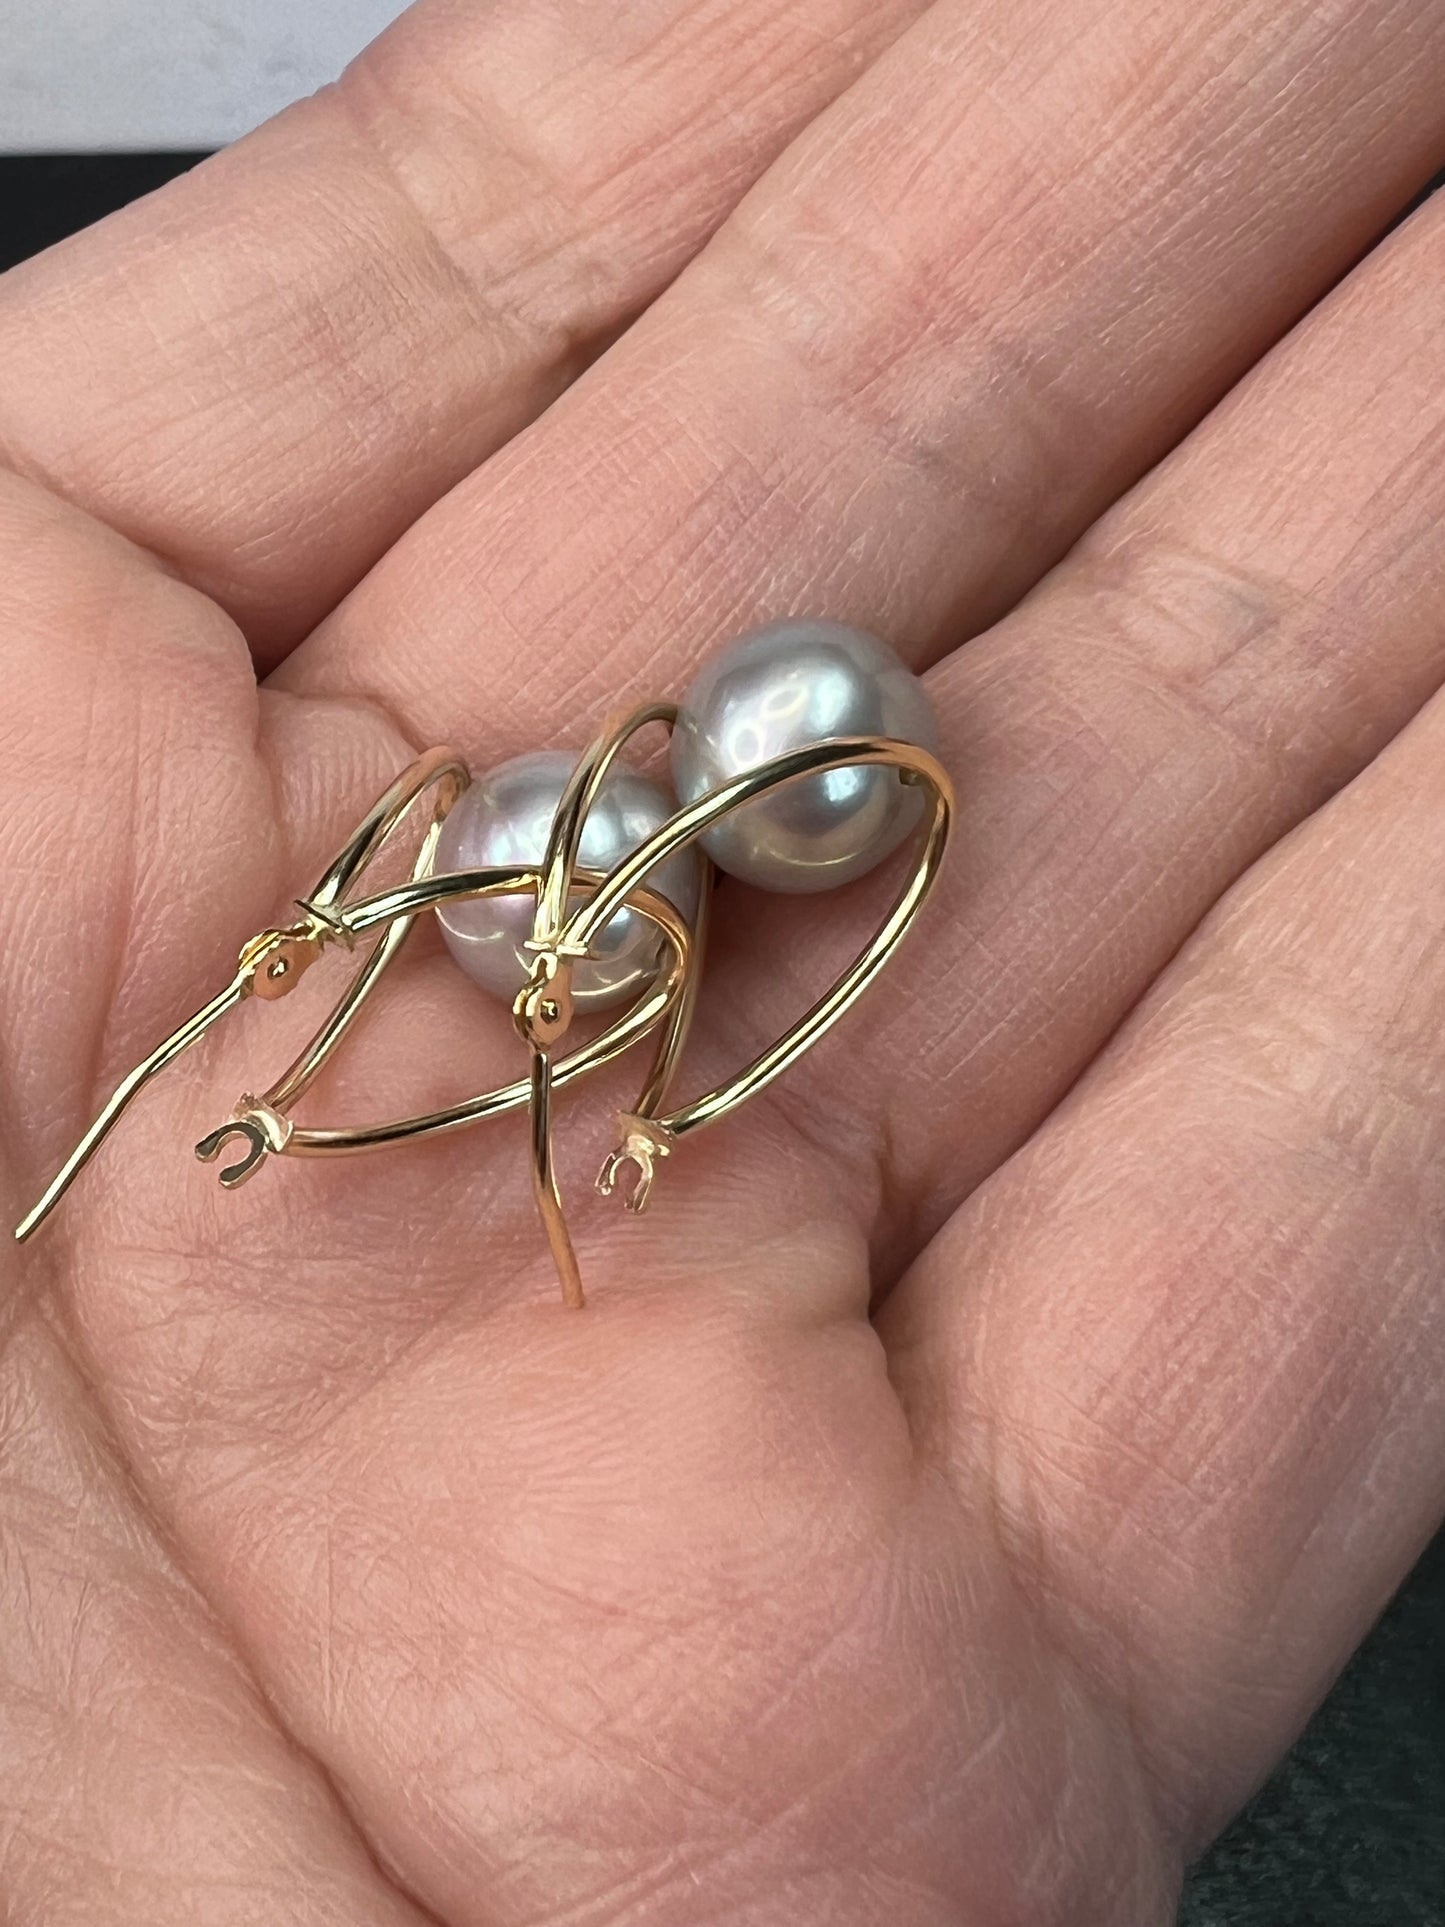 14k yellow gold cultured pearl earrings